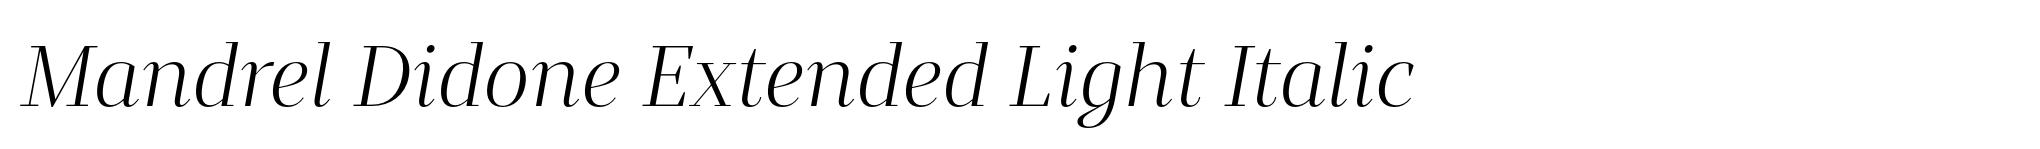 Mandrel Didone Extended Light Italic image